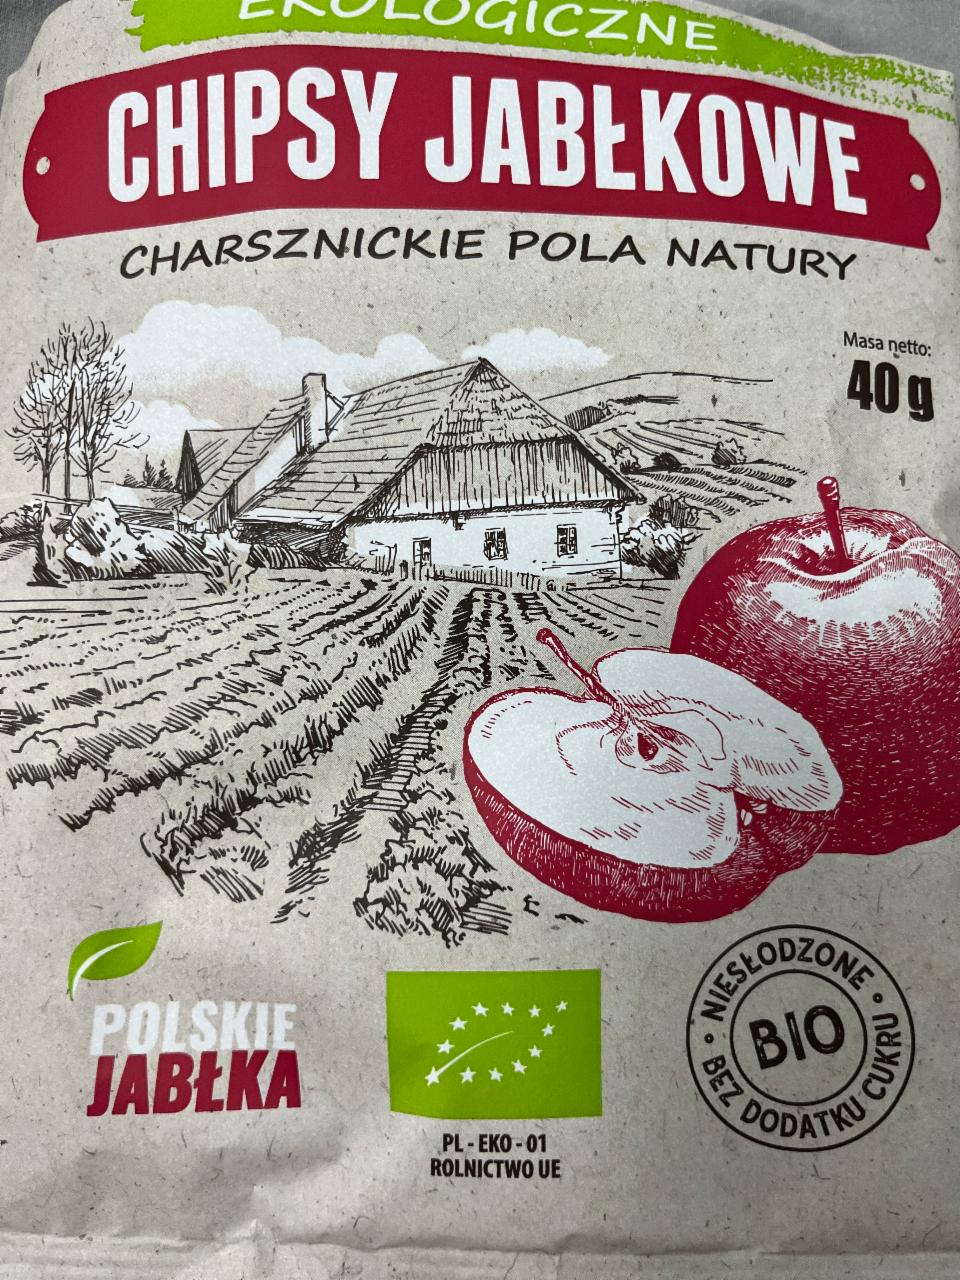 Фото - Чипсы яблочные Chipsy Jabłkowe Polskie Jablka